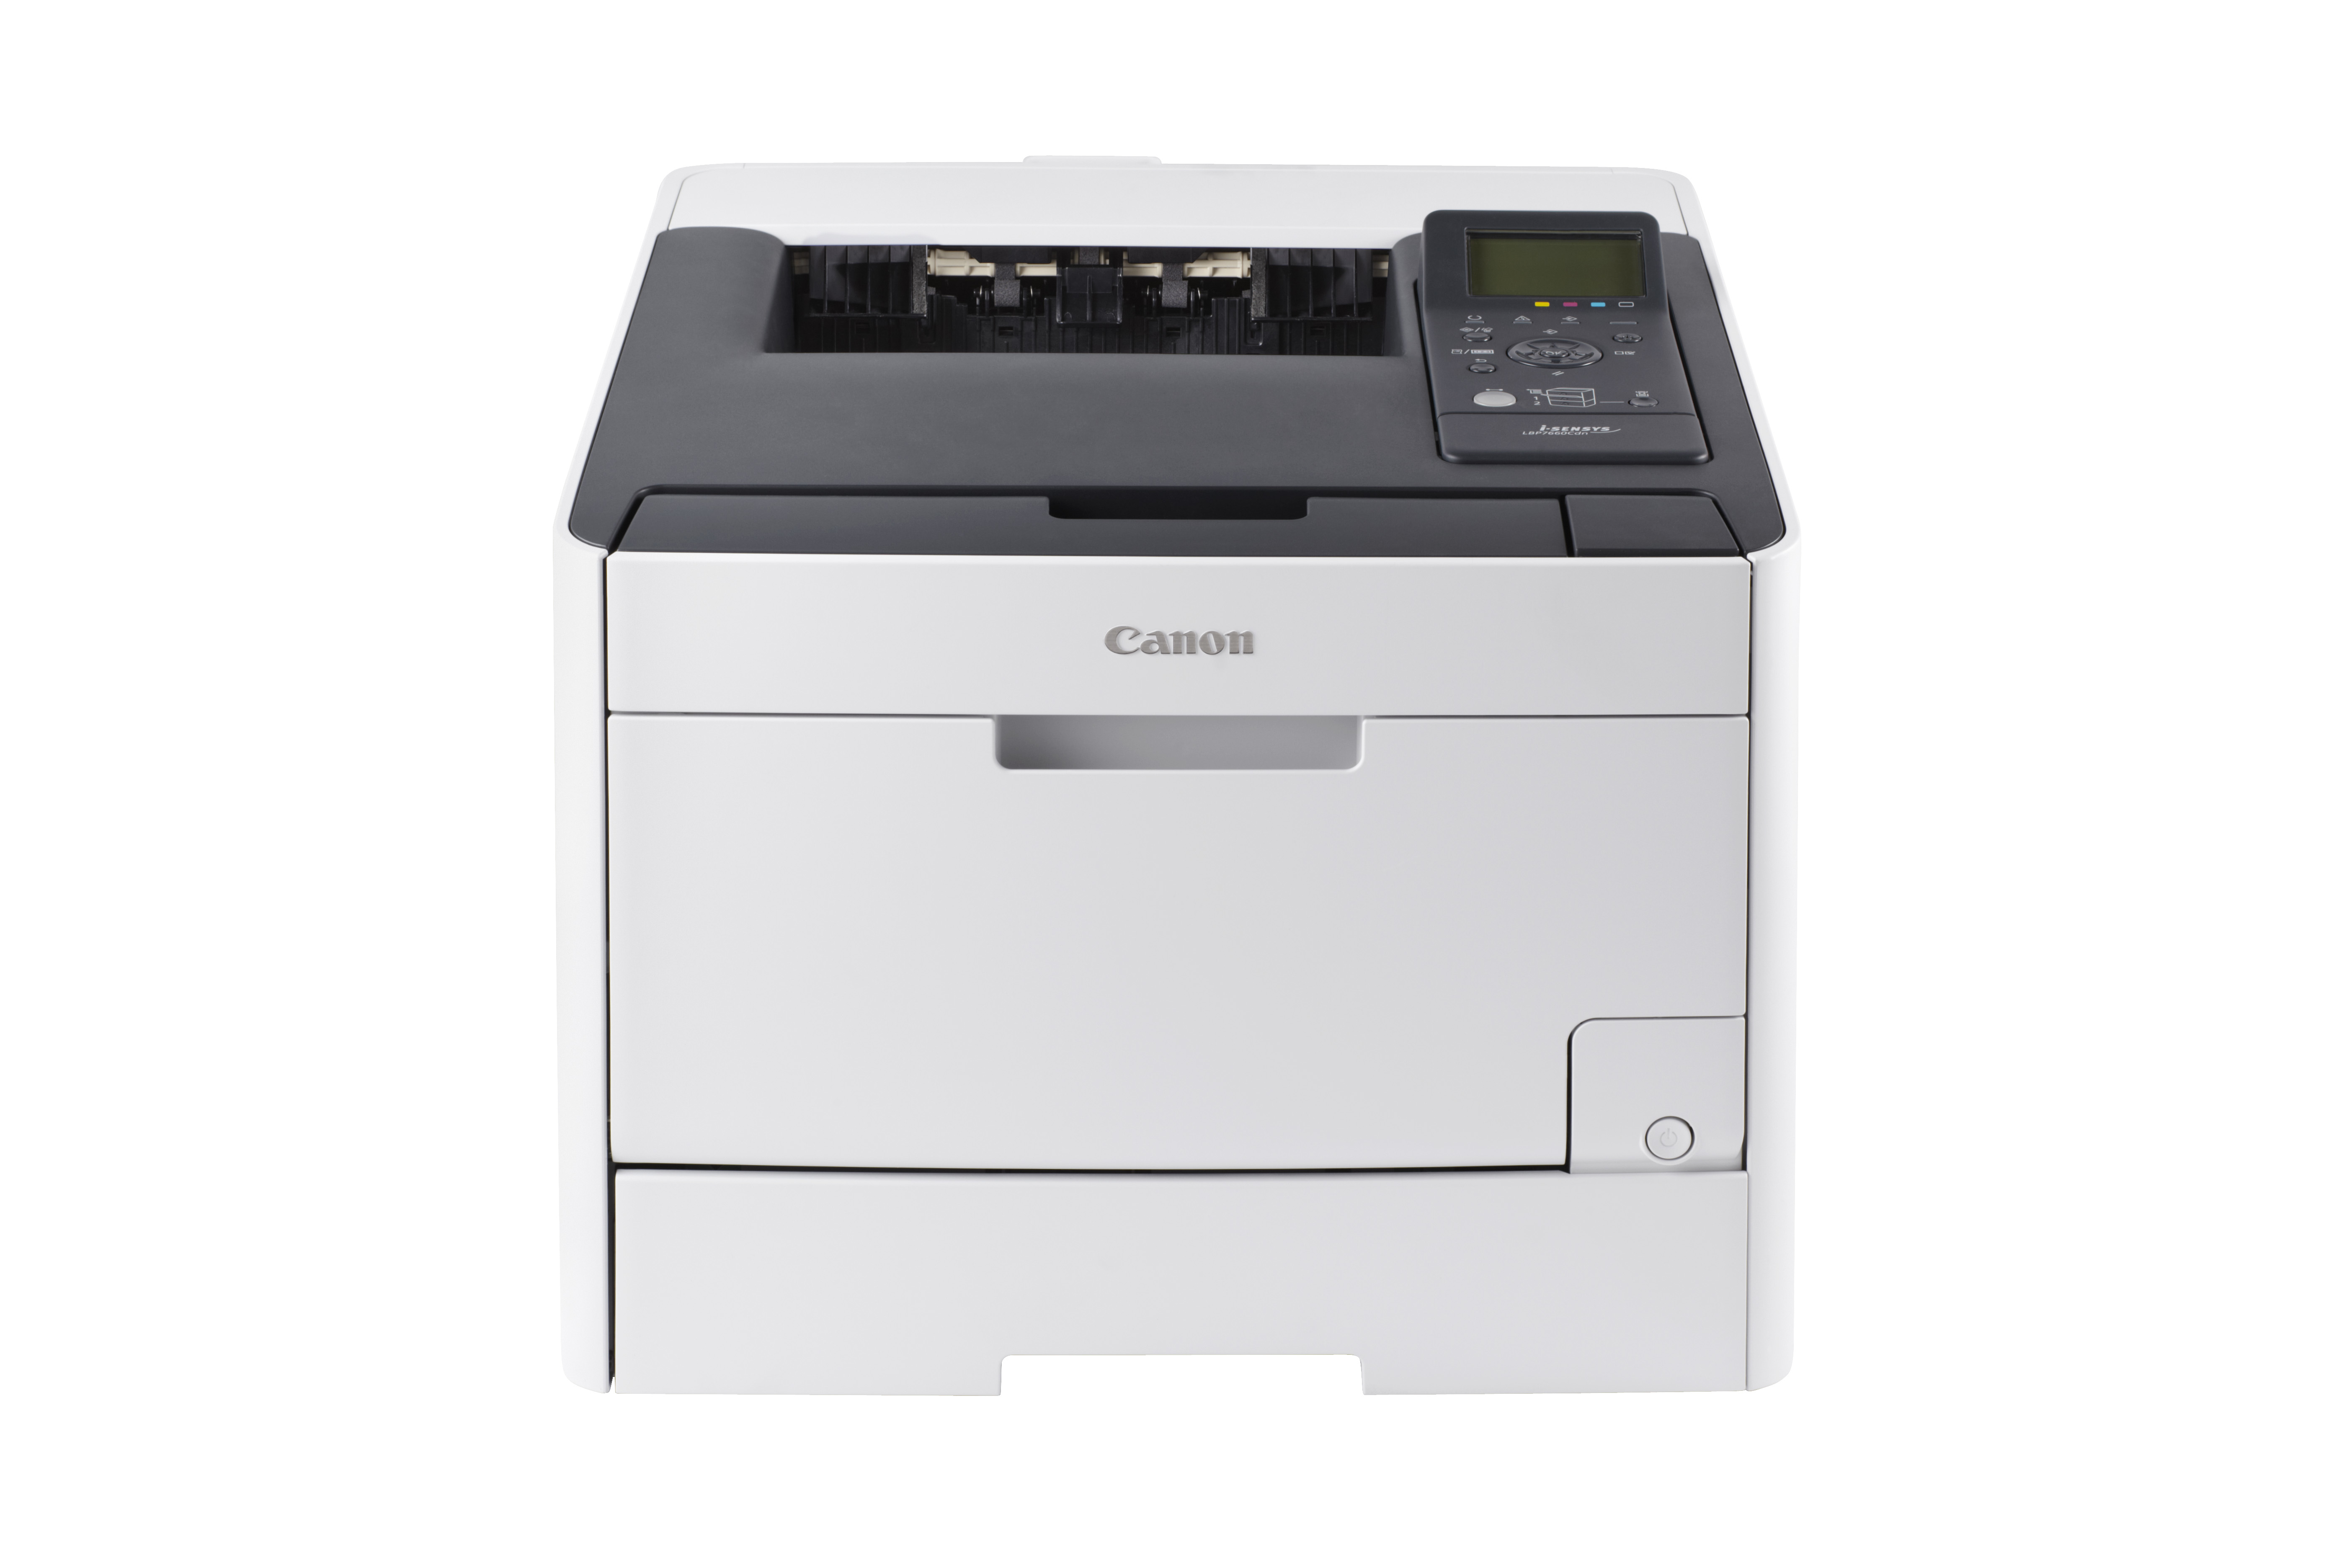 Canon i-SENSYS LBP7660CDN Colour Laser Printer 5089B011 - Refurbished